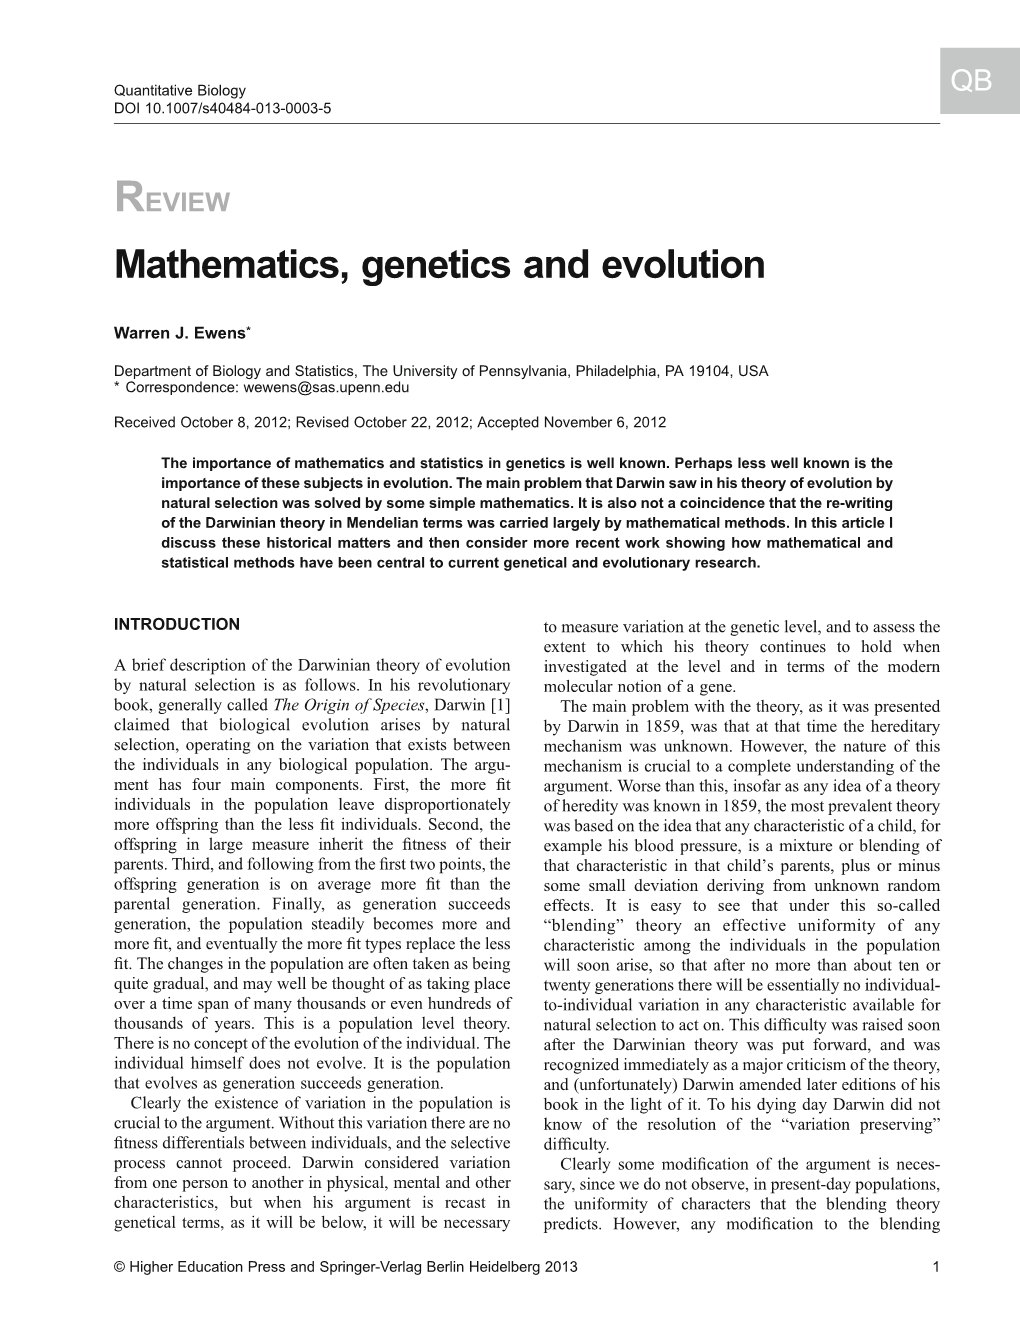 Mathematics, Genetics and Evolution